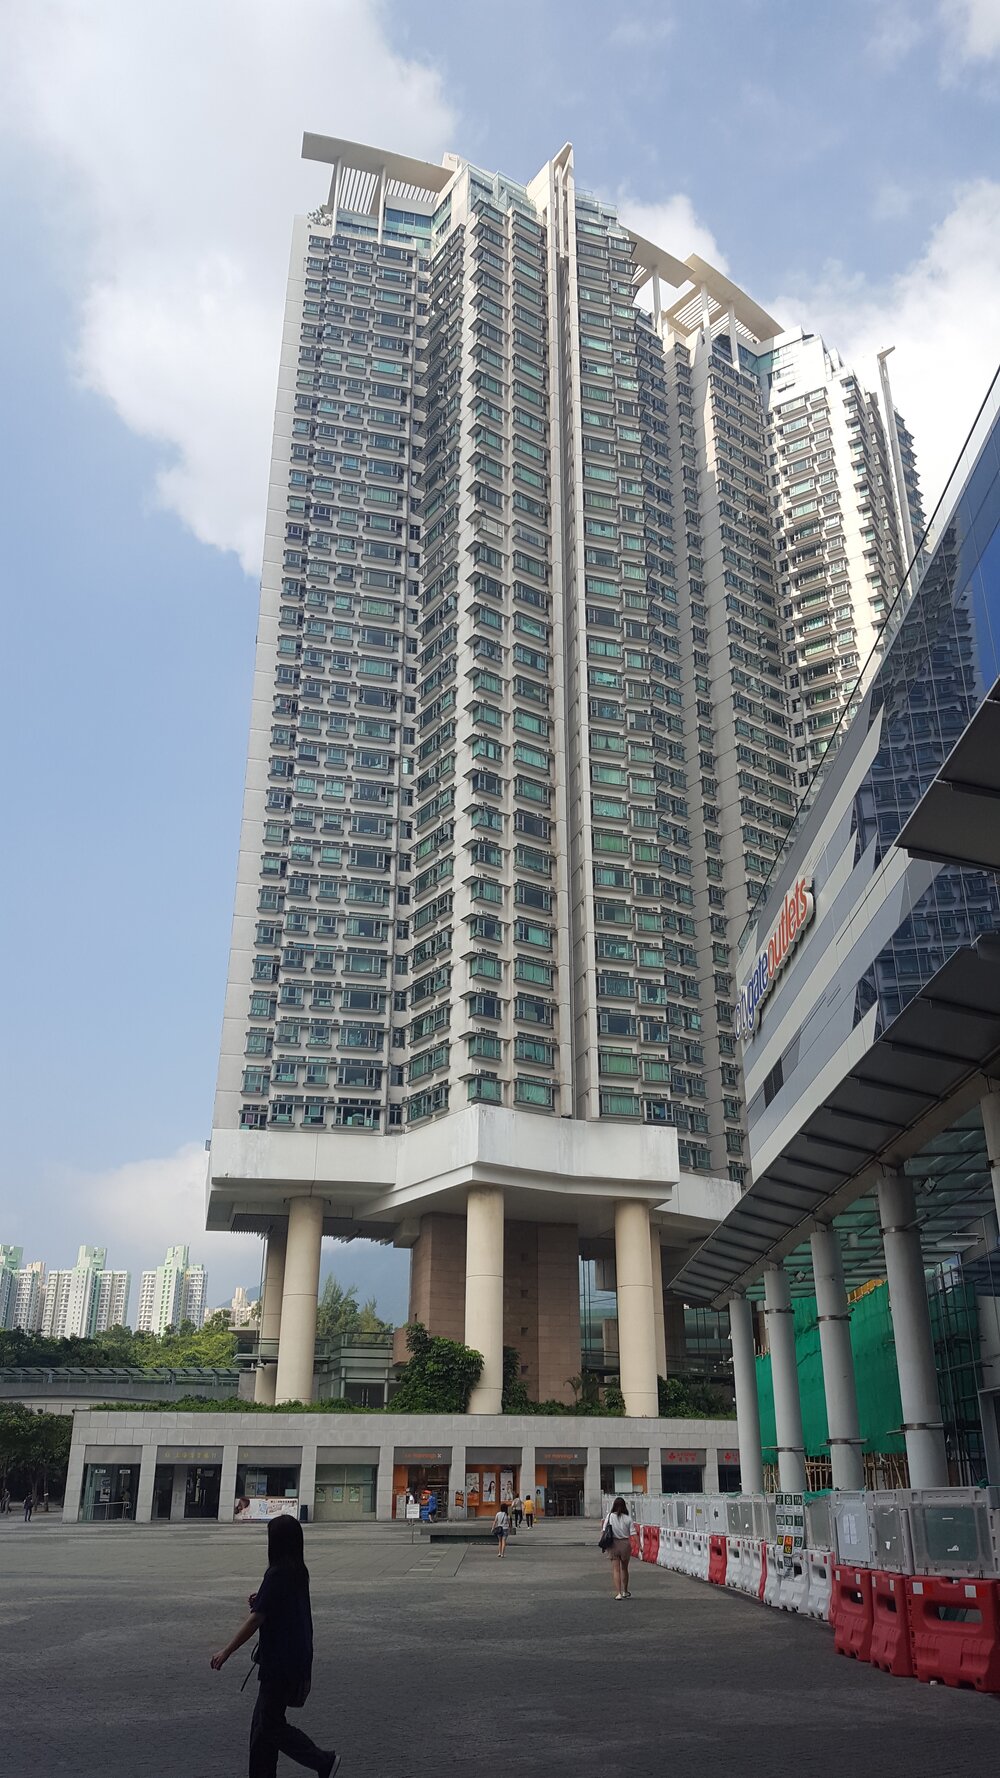 Just a HK apartment building